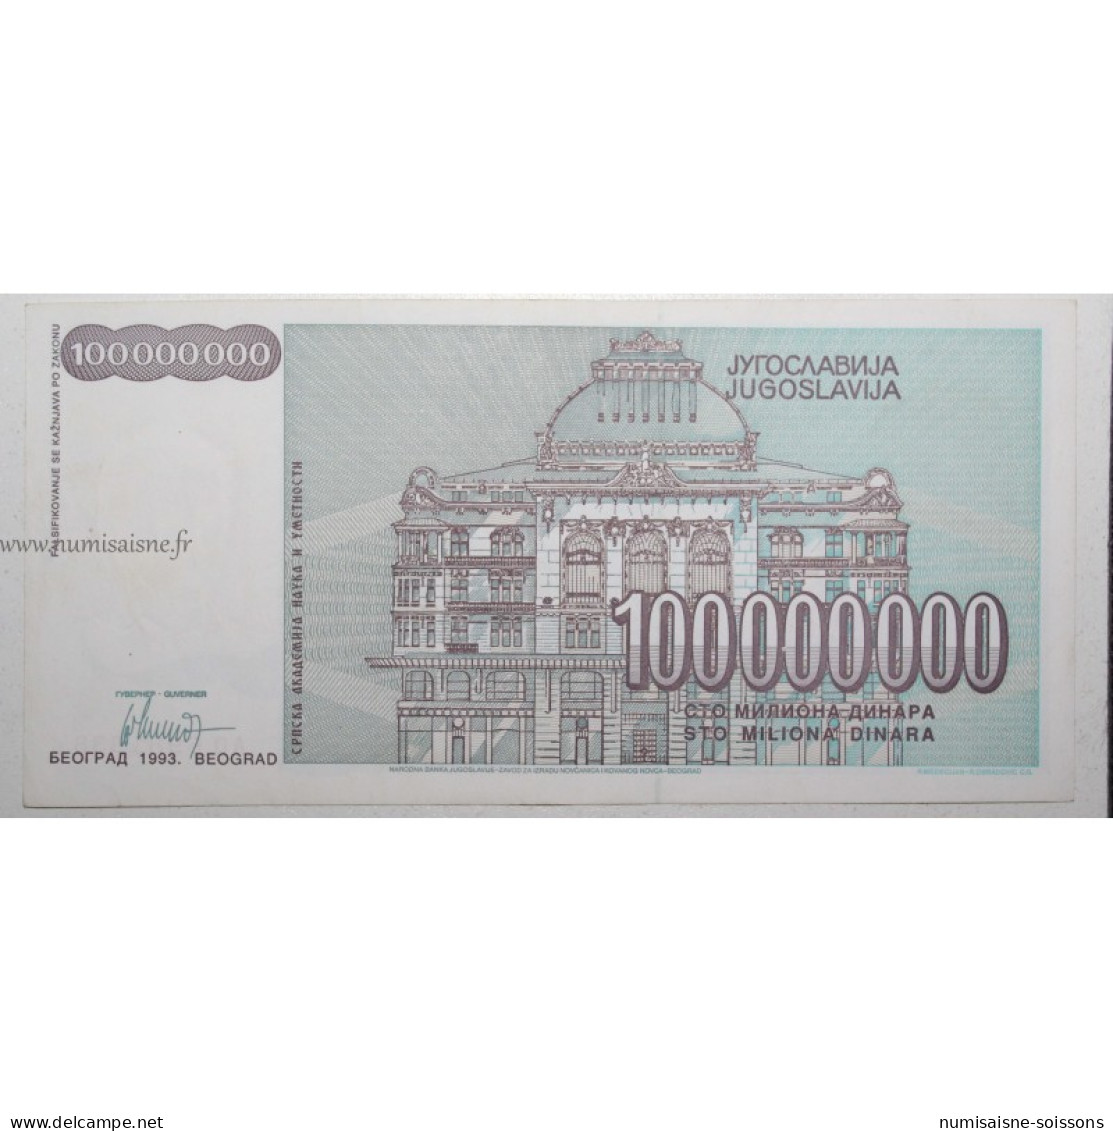 YOUGOSLAVIE - PICK 124 - 100 000 000 DINARA - 1993 - SIGN 17 - SUP - Yougoslavie